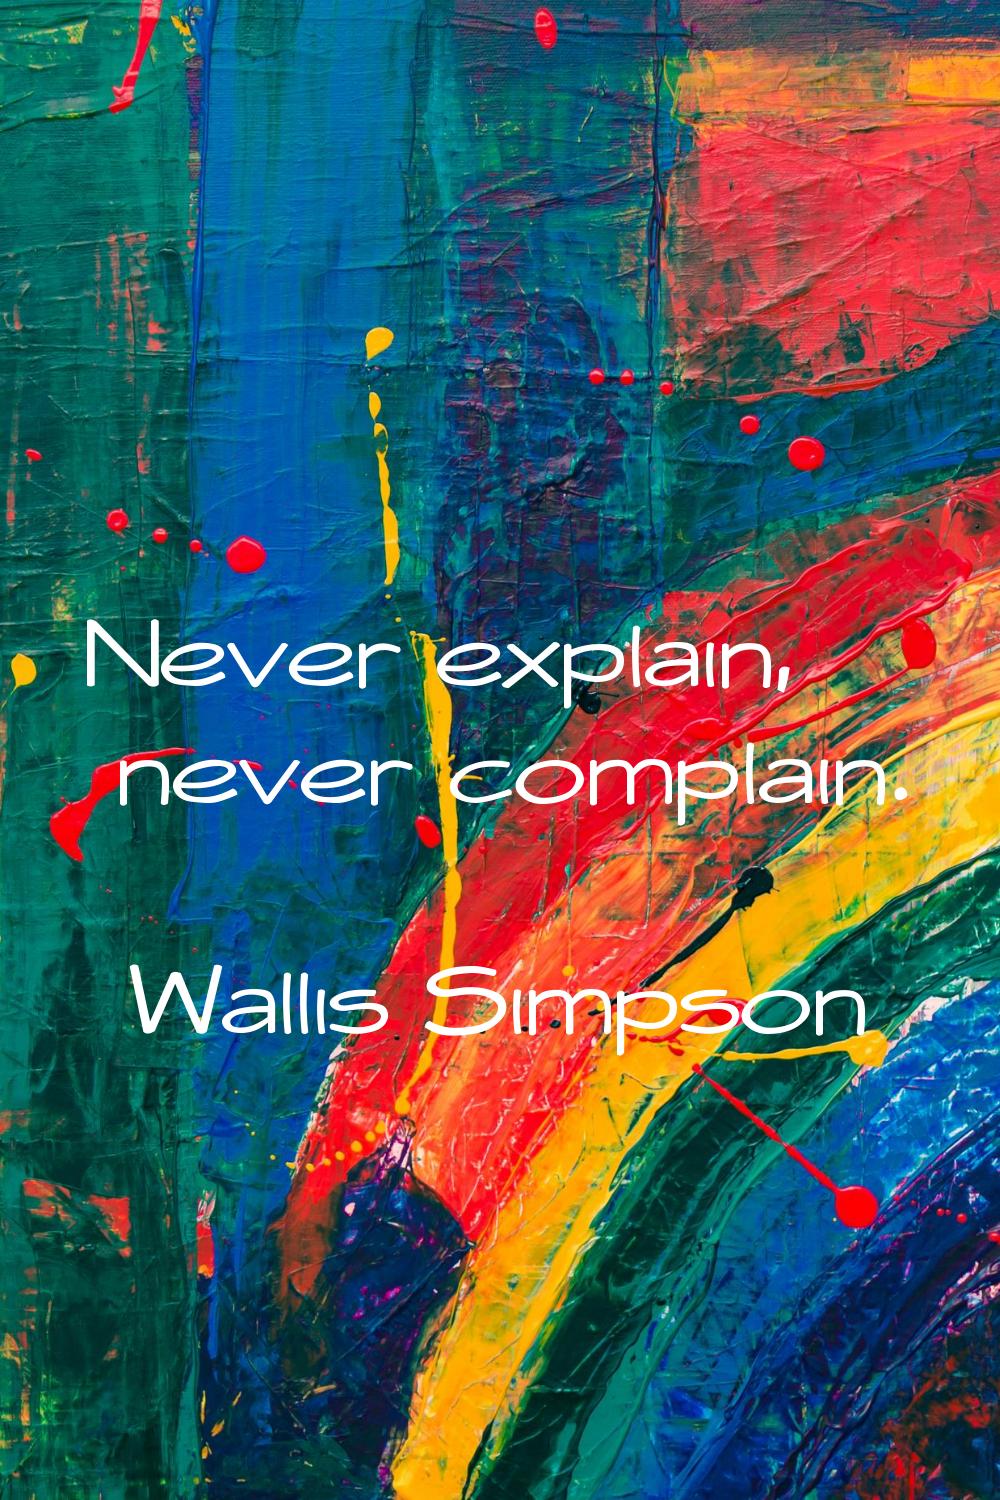 Never explain, never complain.